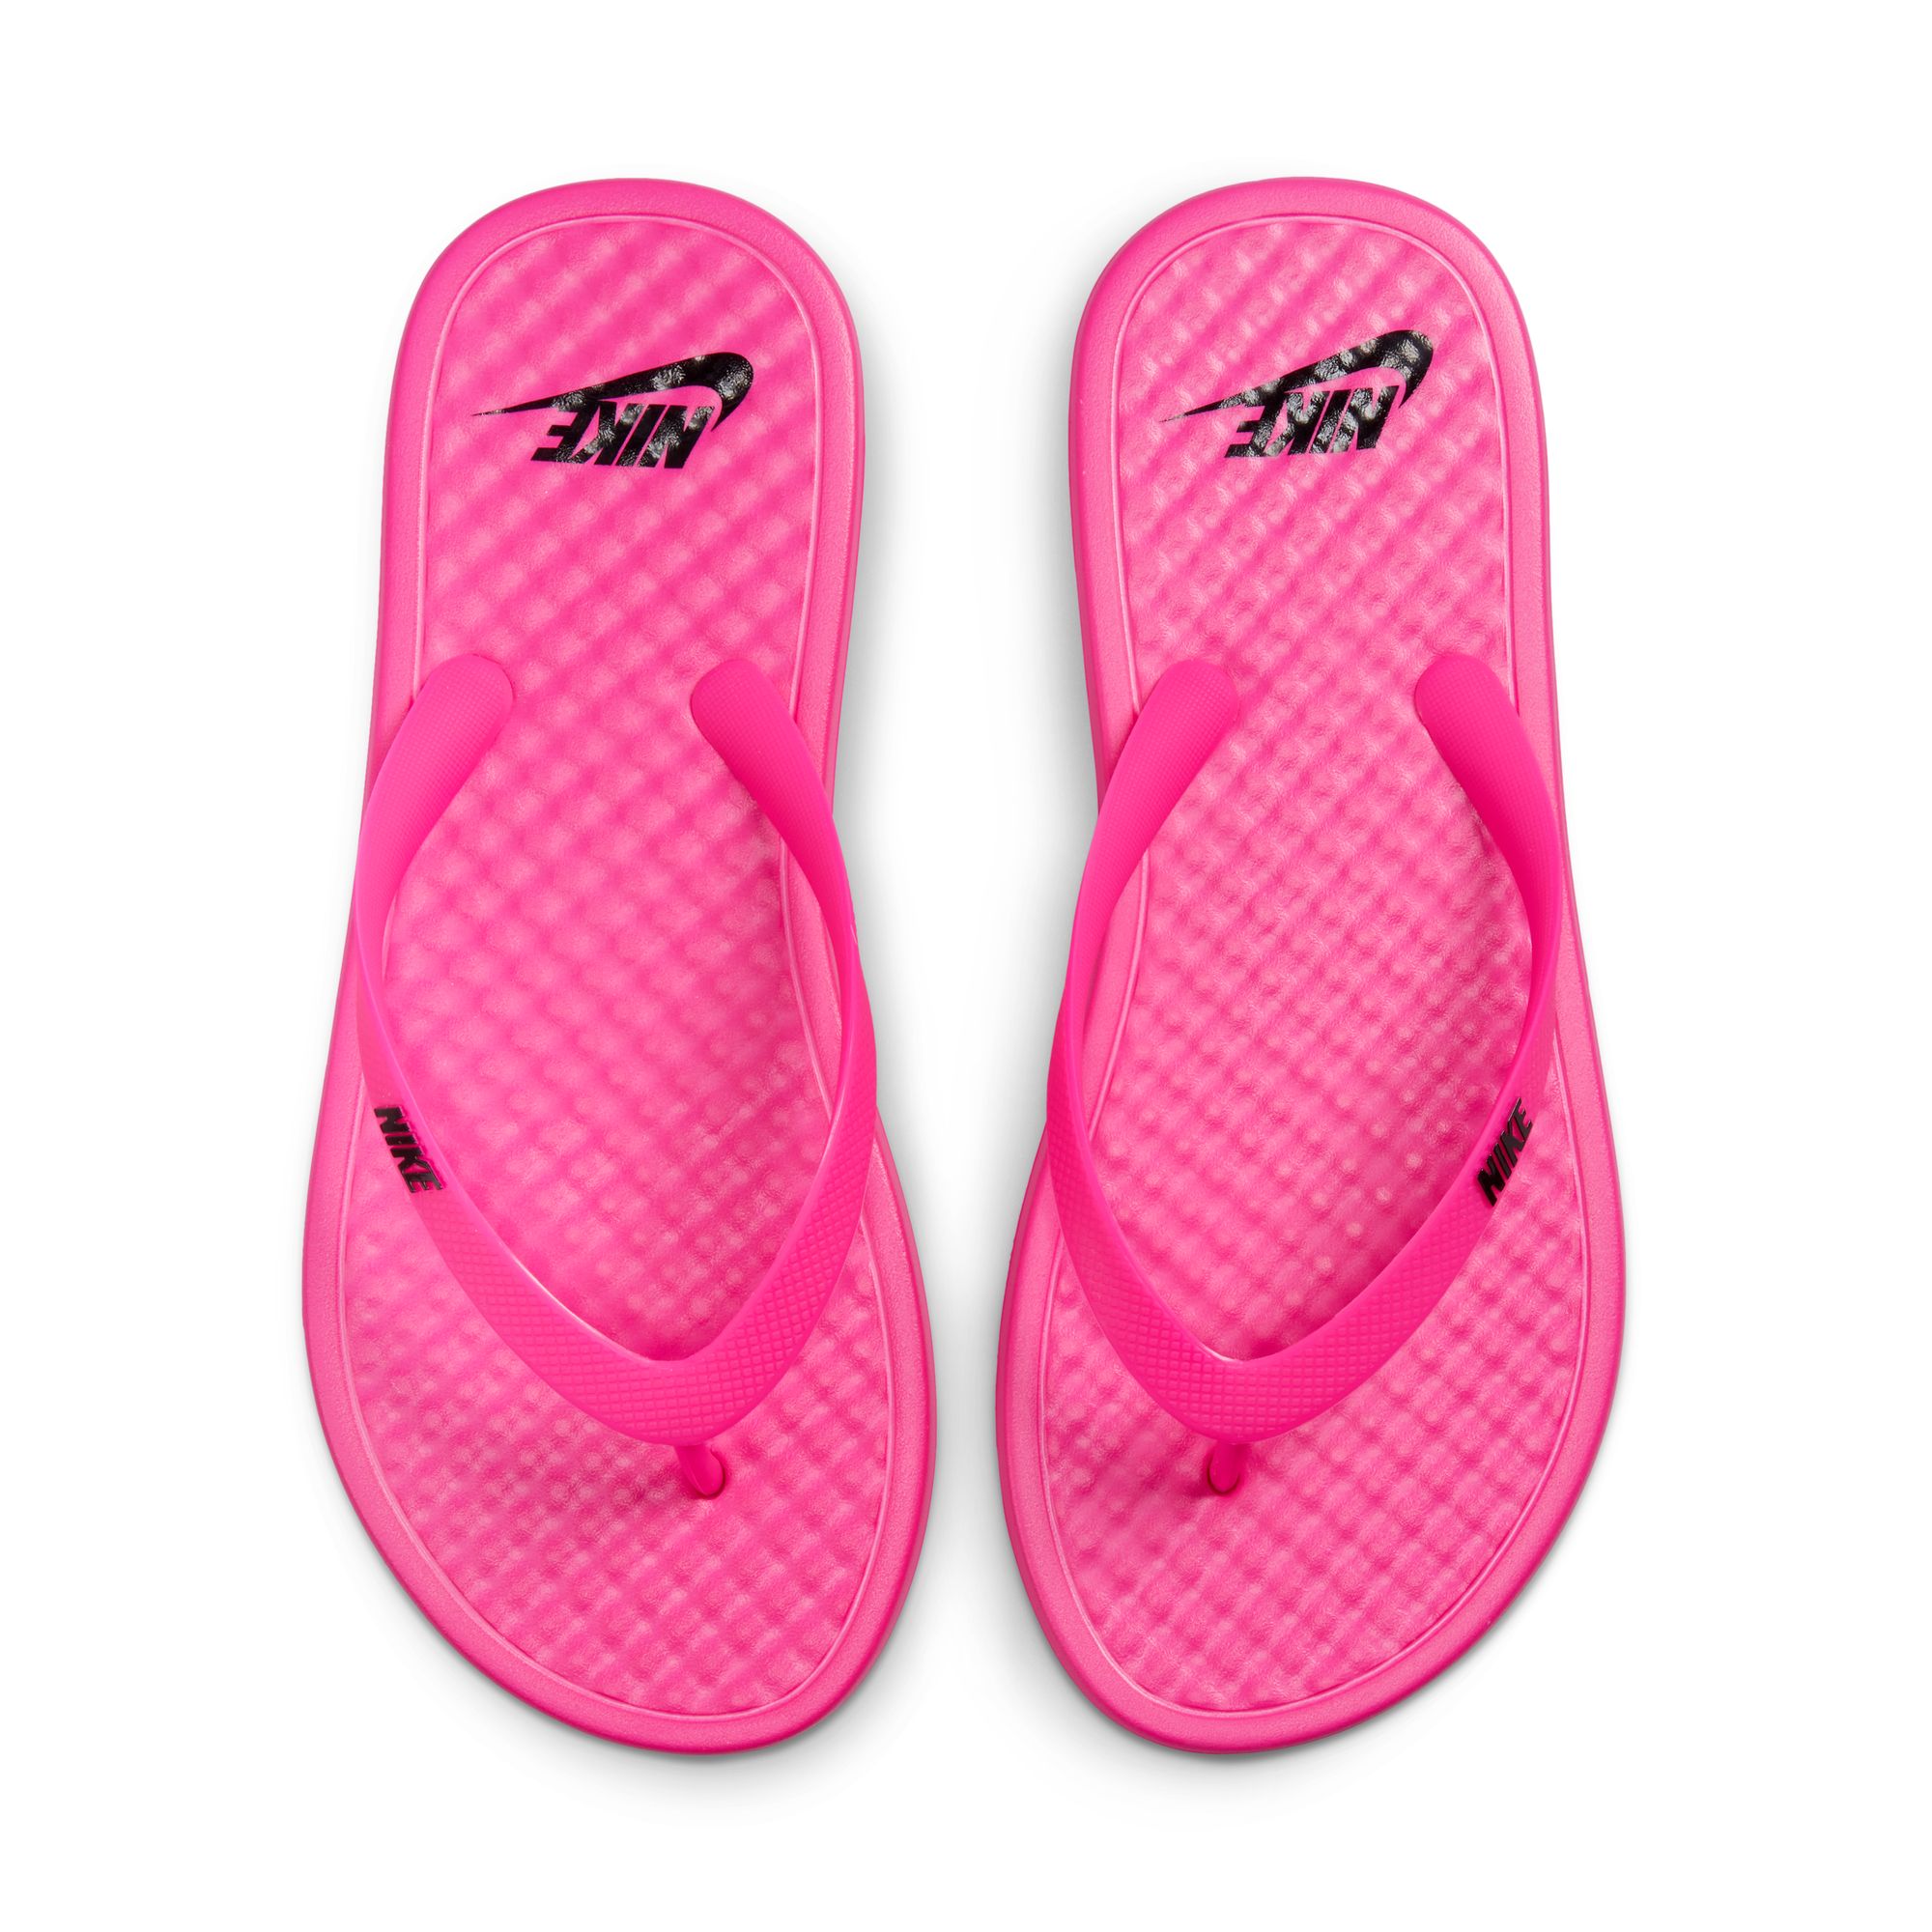 Jual NIKE Women Sportswear On Deck Flip Flop Sandal Wanita [CU3959-601] - 9  Pink Prime/Black-White di Seller Nike Sports Official Store - Gudang Blibli